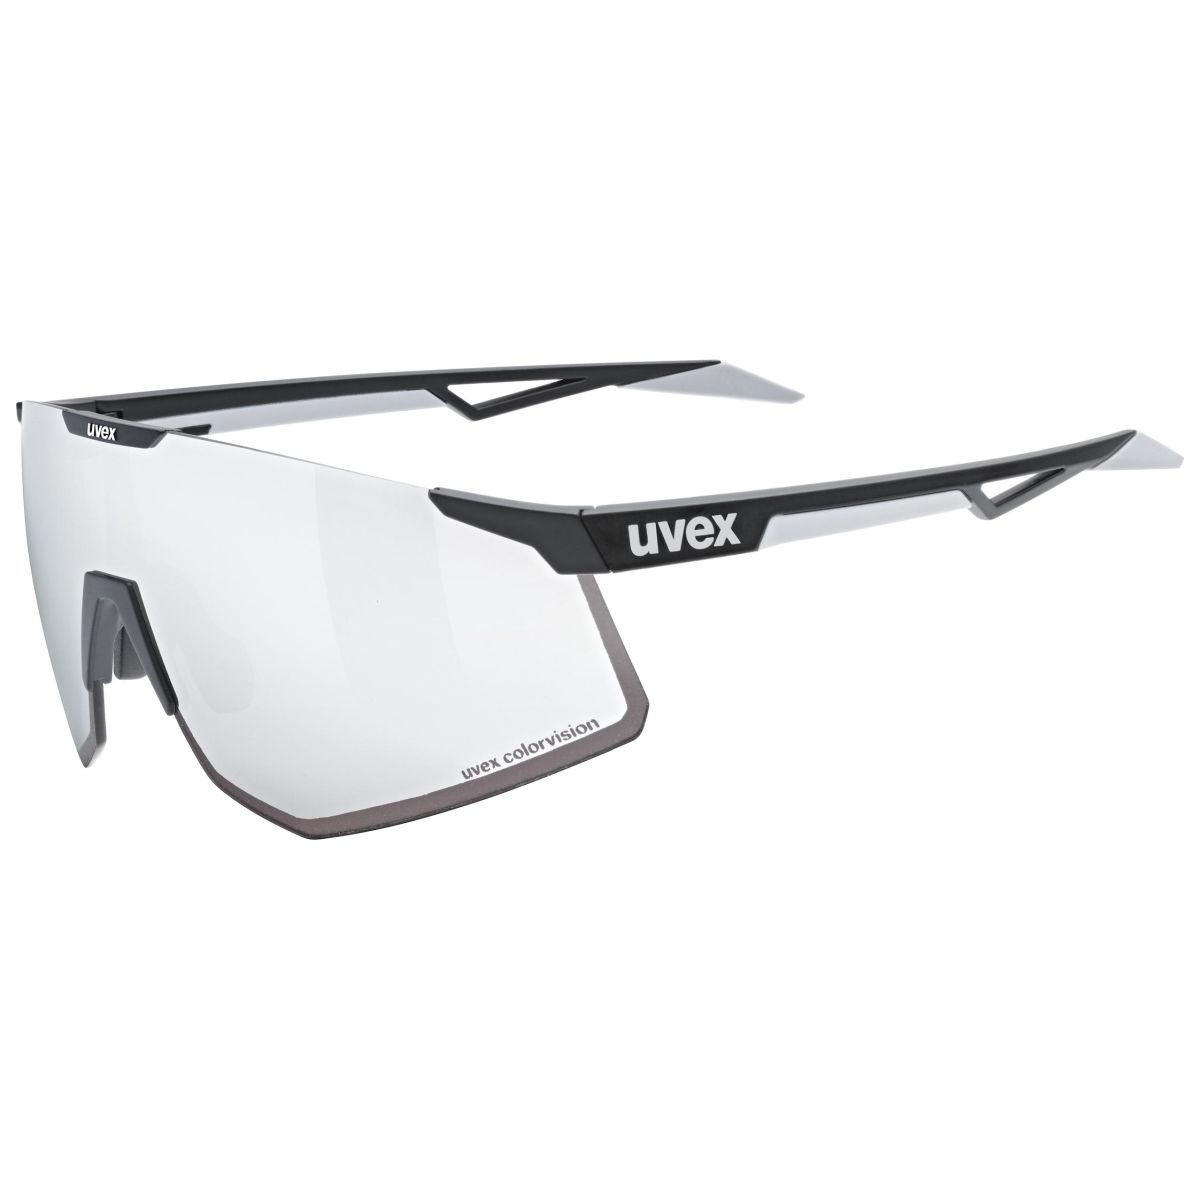 Produktbild von Uvex pace perform small CV Brille - black matt/mirror silver colorvision